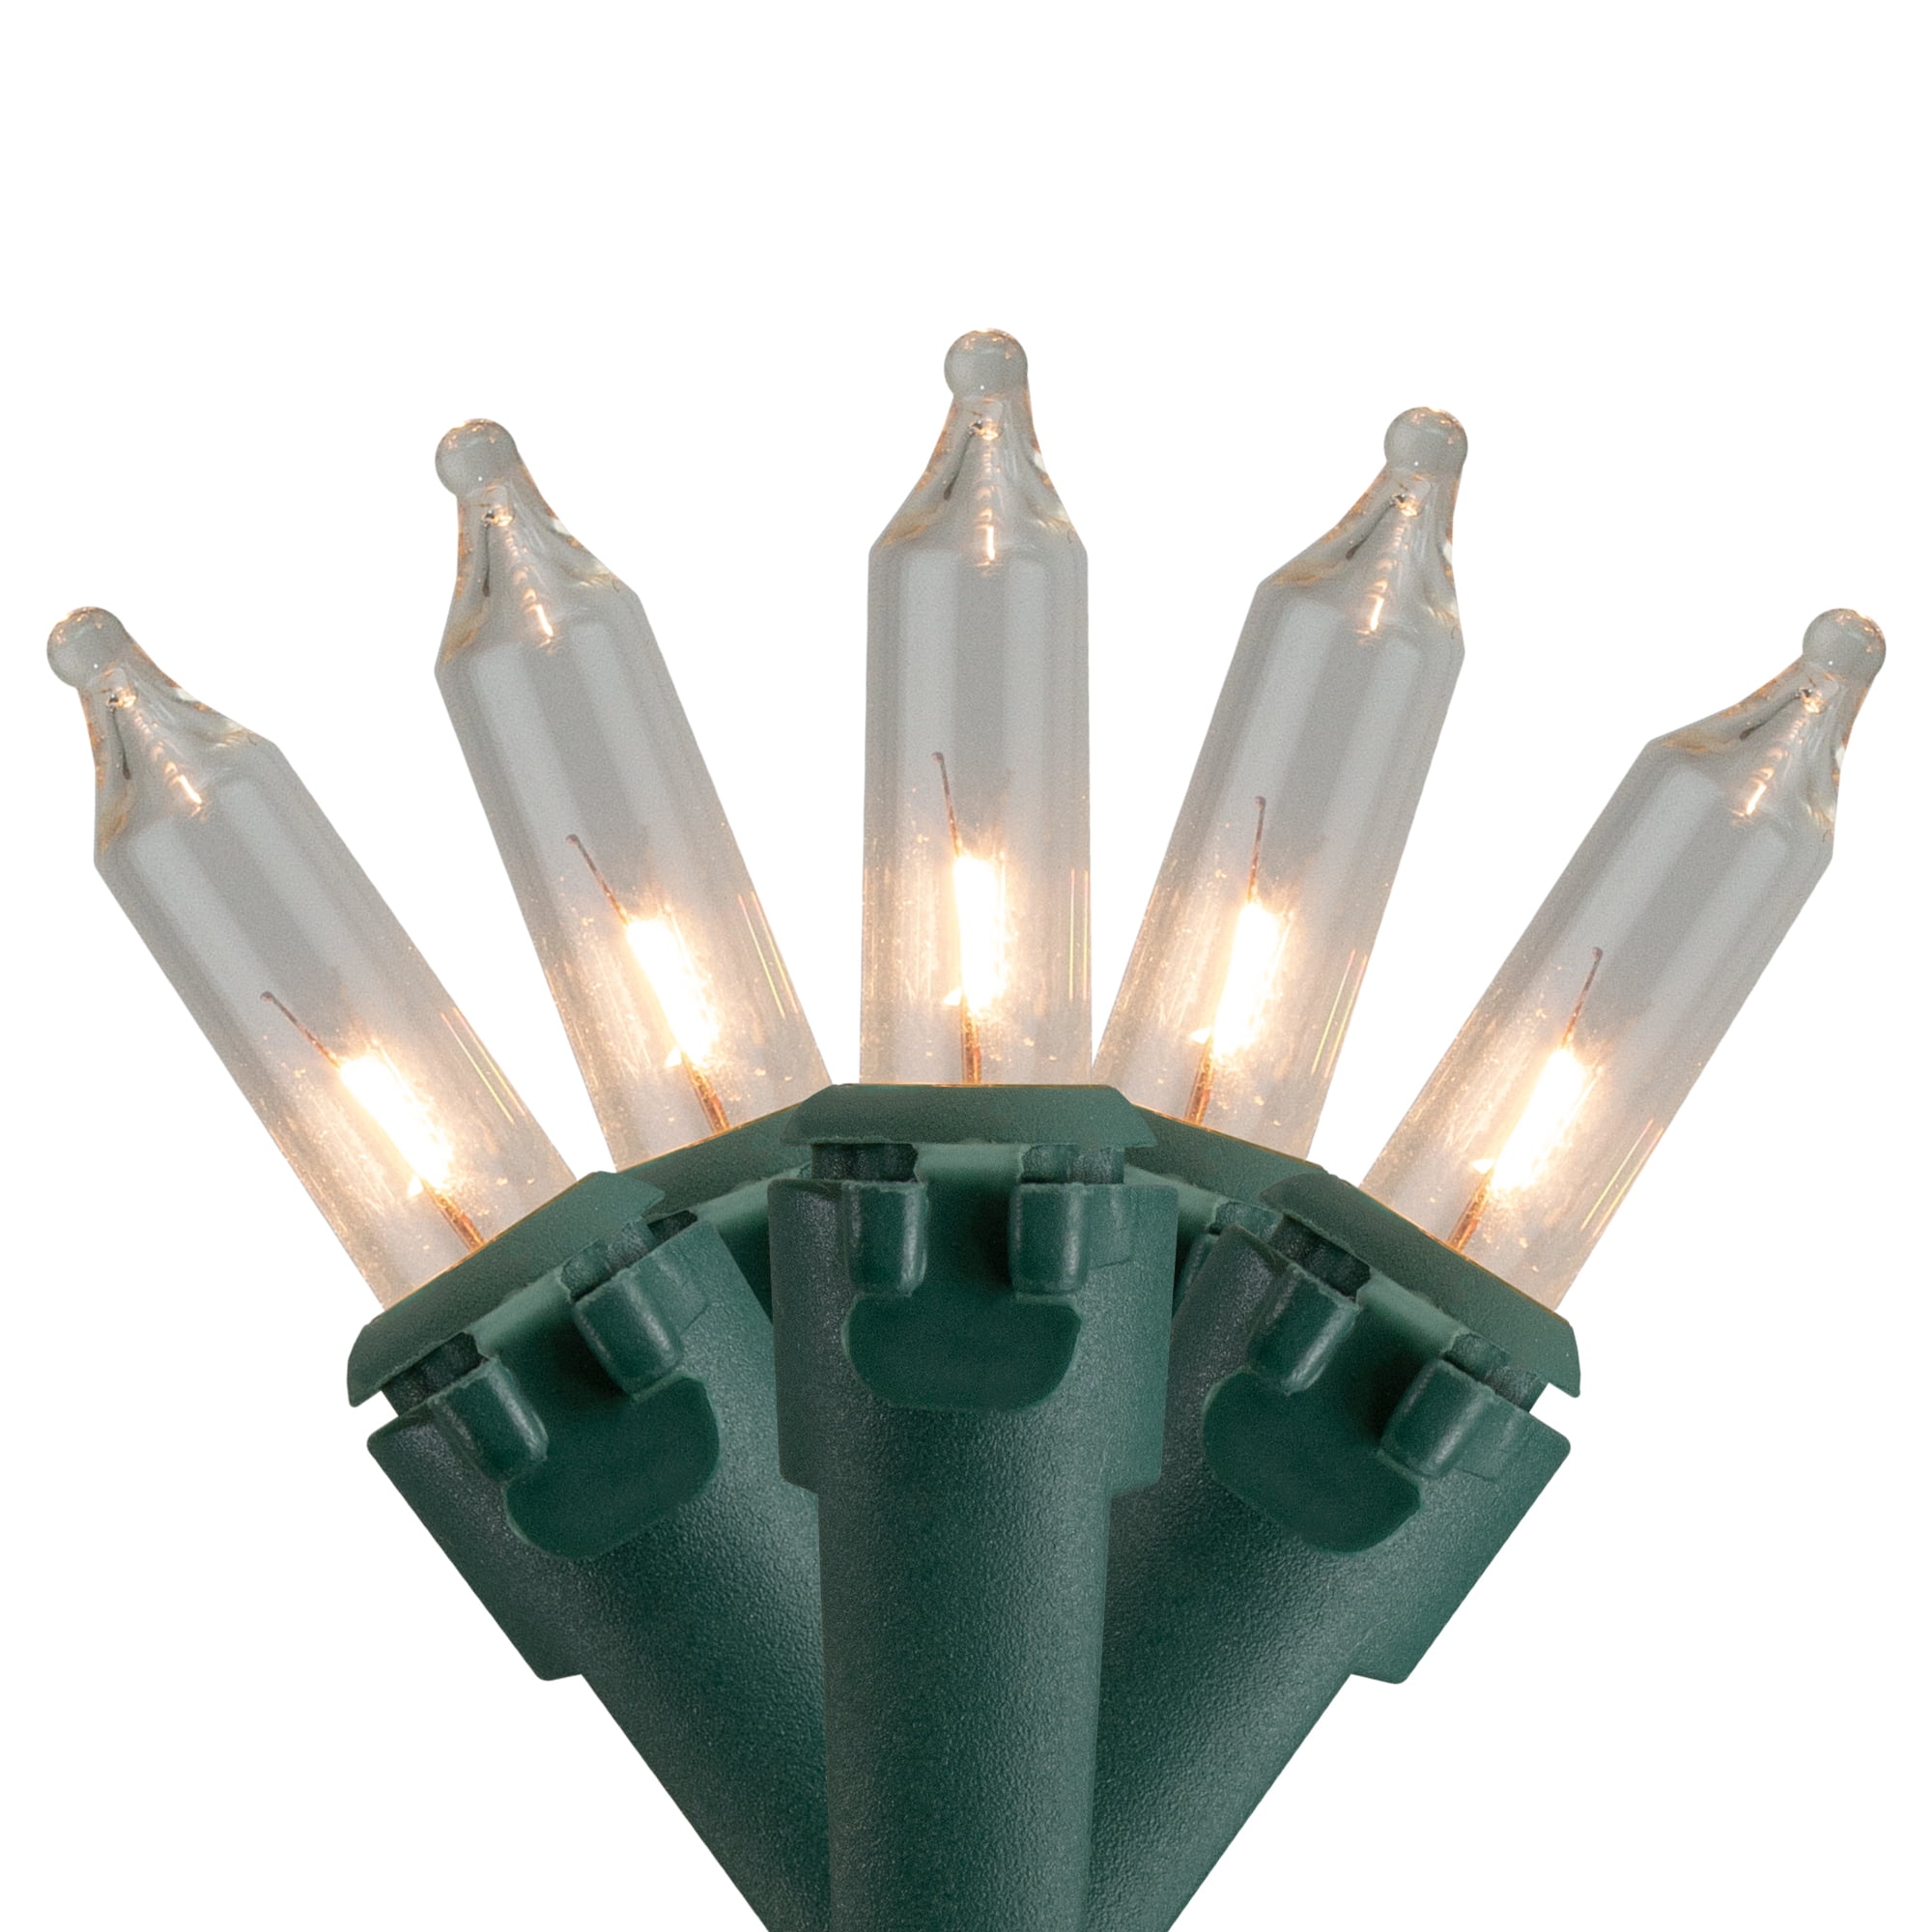 Ulta-Lit LightKeeper Pro Repair Tool for Incandescent Light Sets Christmas  Light 784642012019